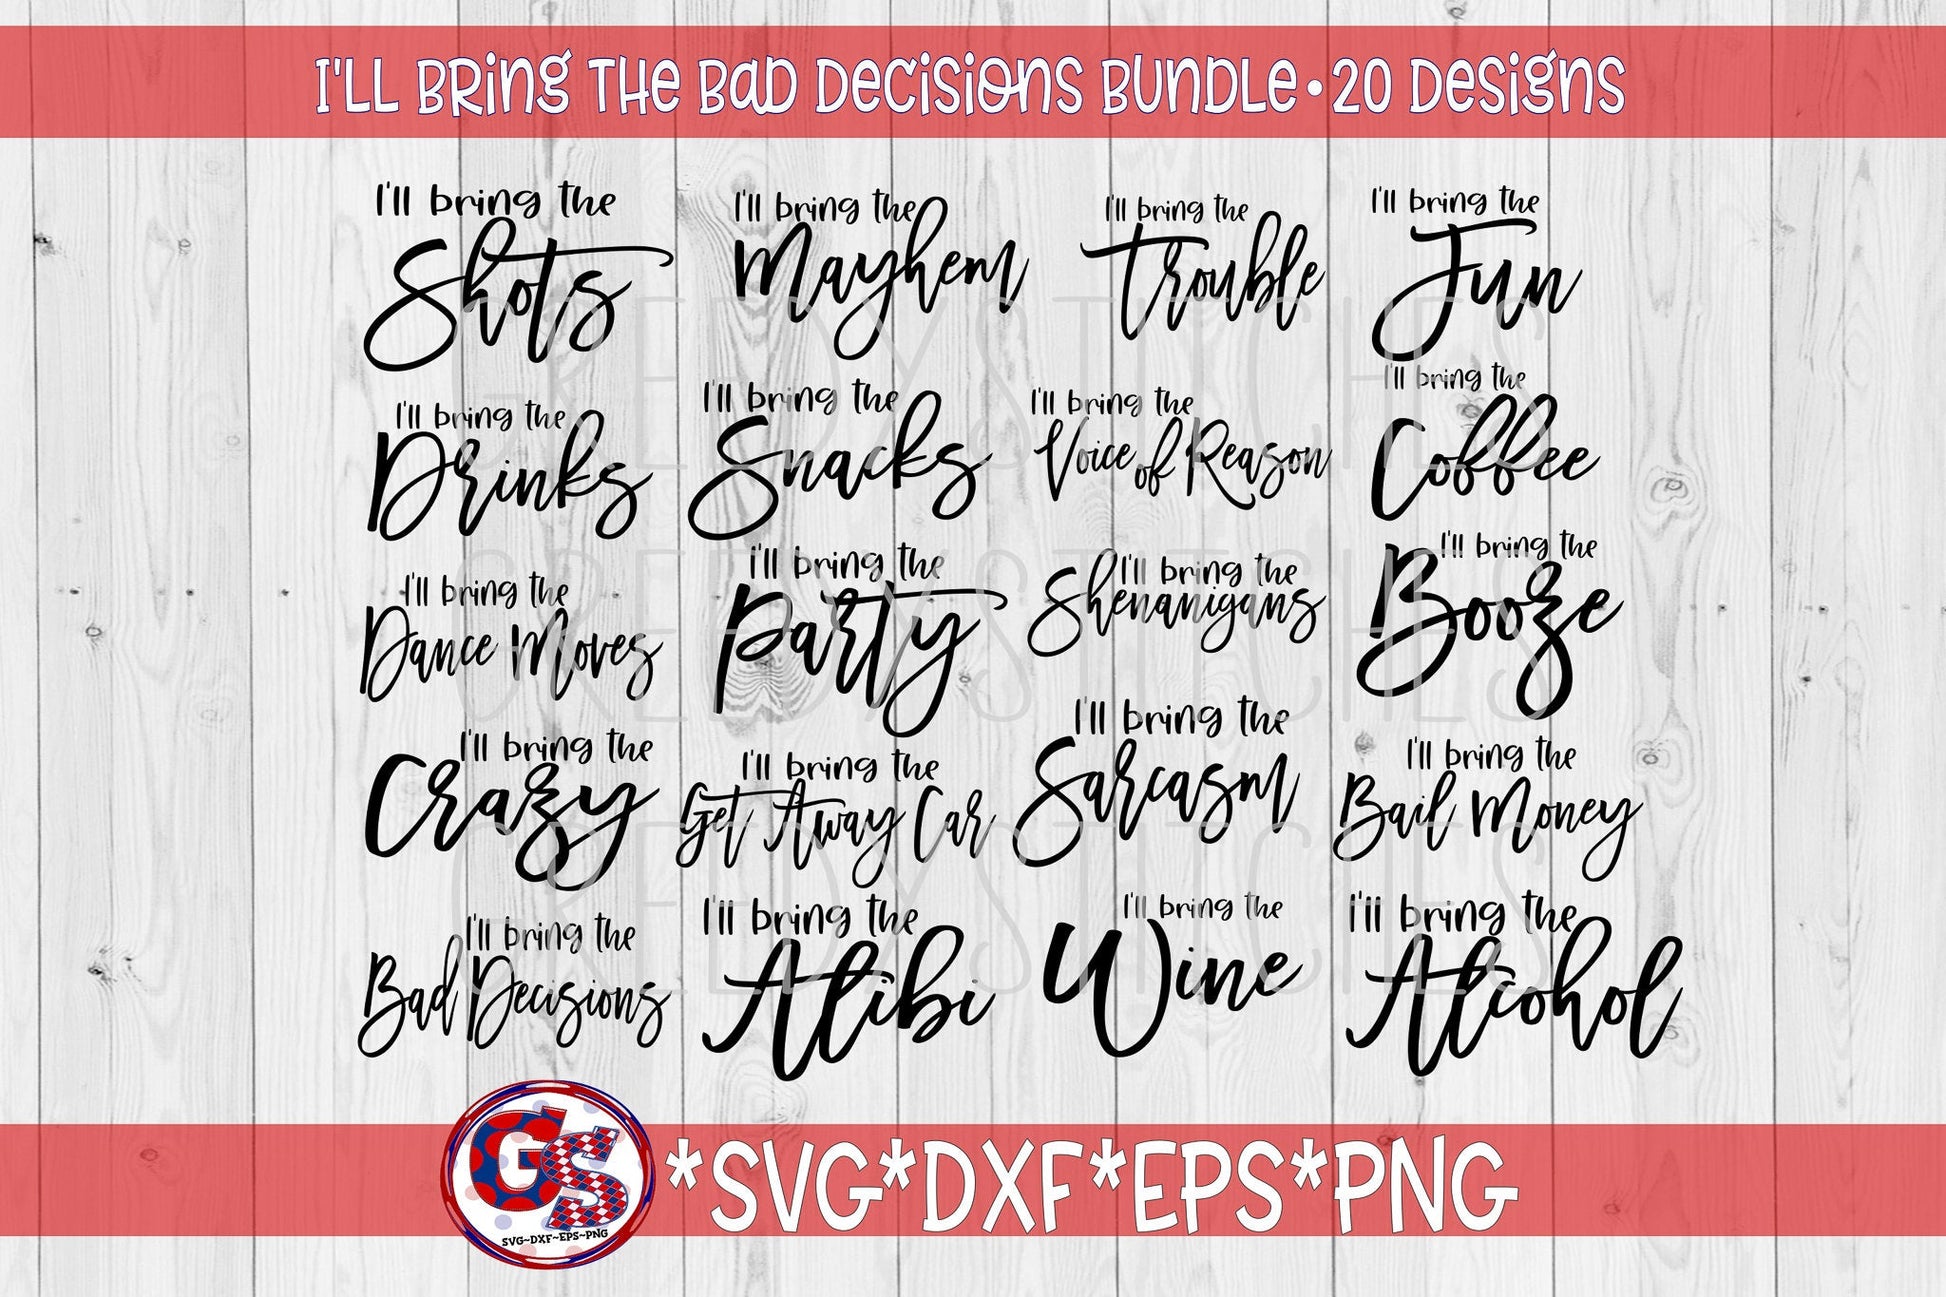 I&#39;ll Bring The Alcohol SVG | I&#39;ll Bring The Bad Decisions SVG Bundle svg, dxf, eps, png. Friends SvG Bundle | Instant Download Cut Files.